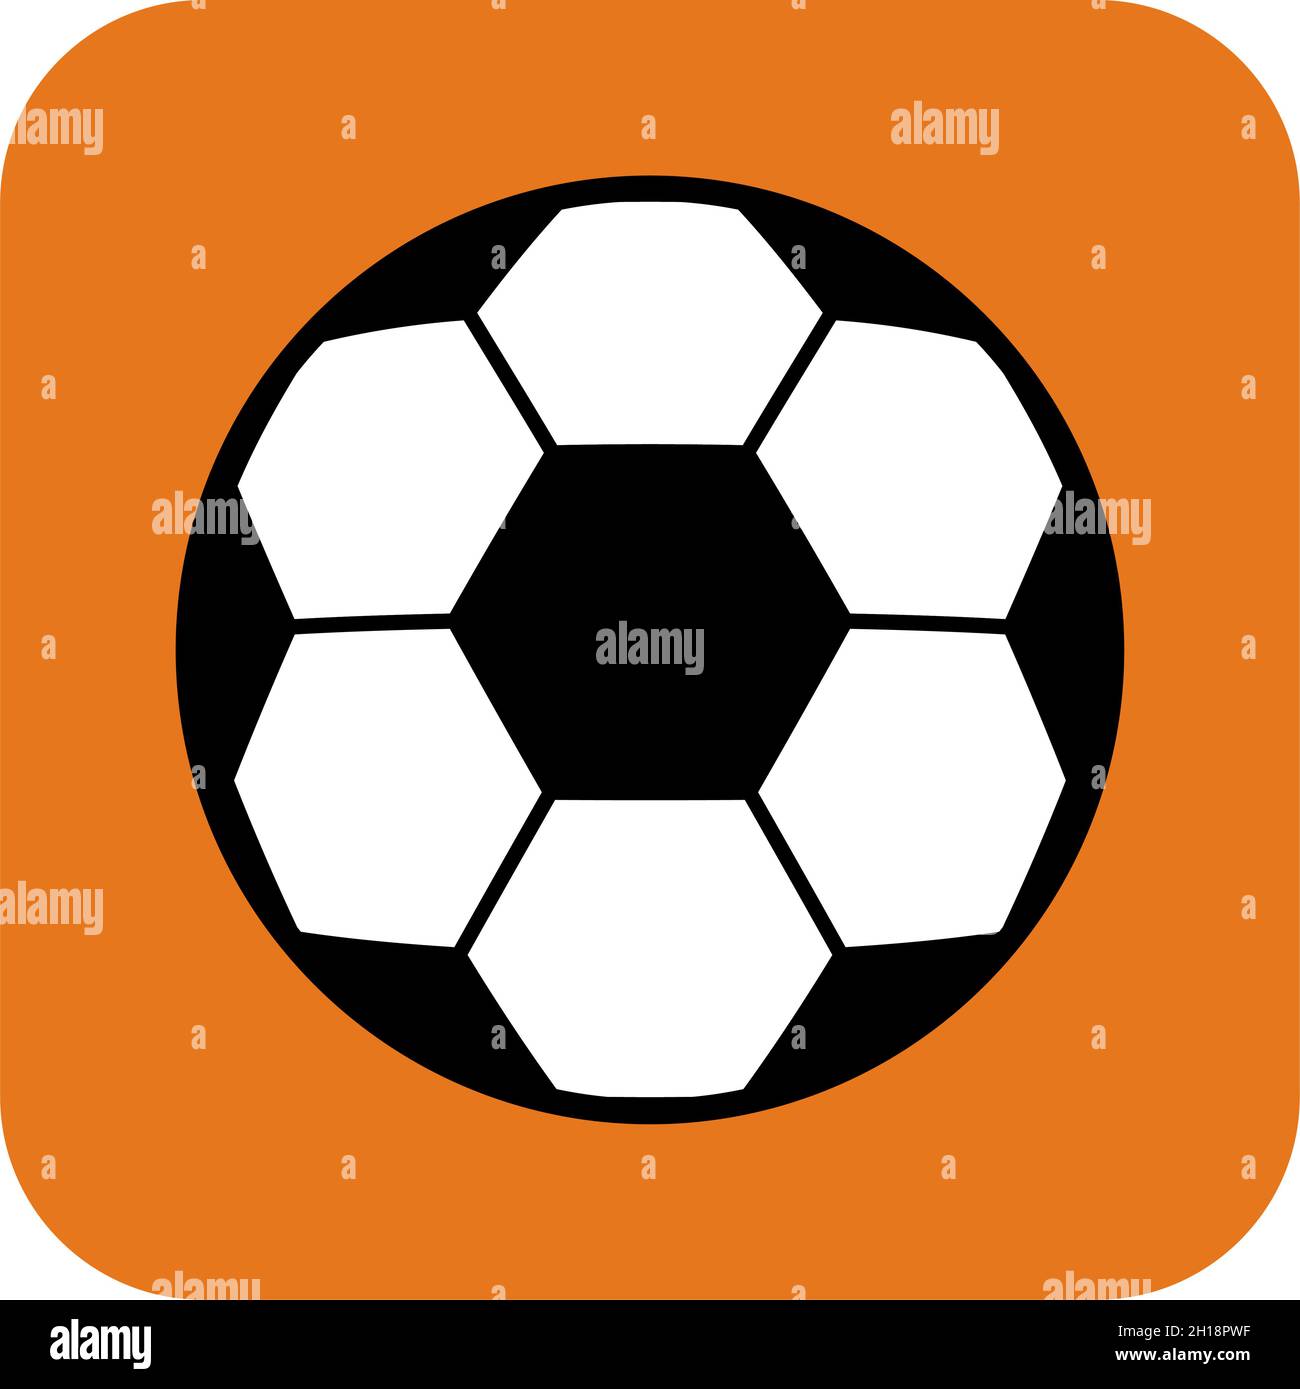 Soccer Football Ball Symbol Single Goal Isolated Design Vector Illustration Web Game Object Stock Vector Image Art Alamy